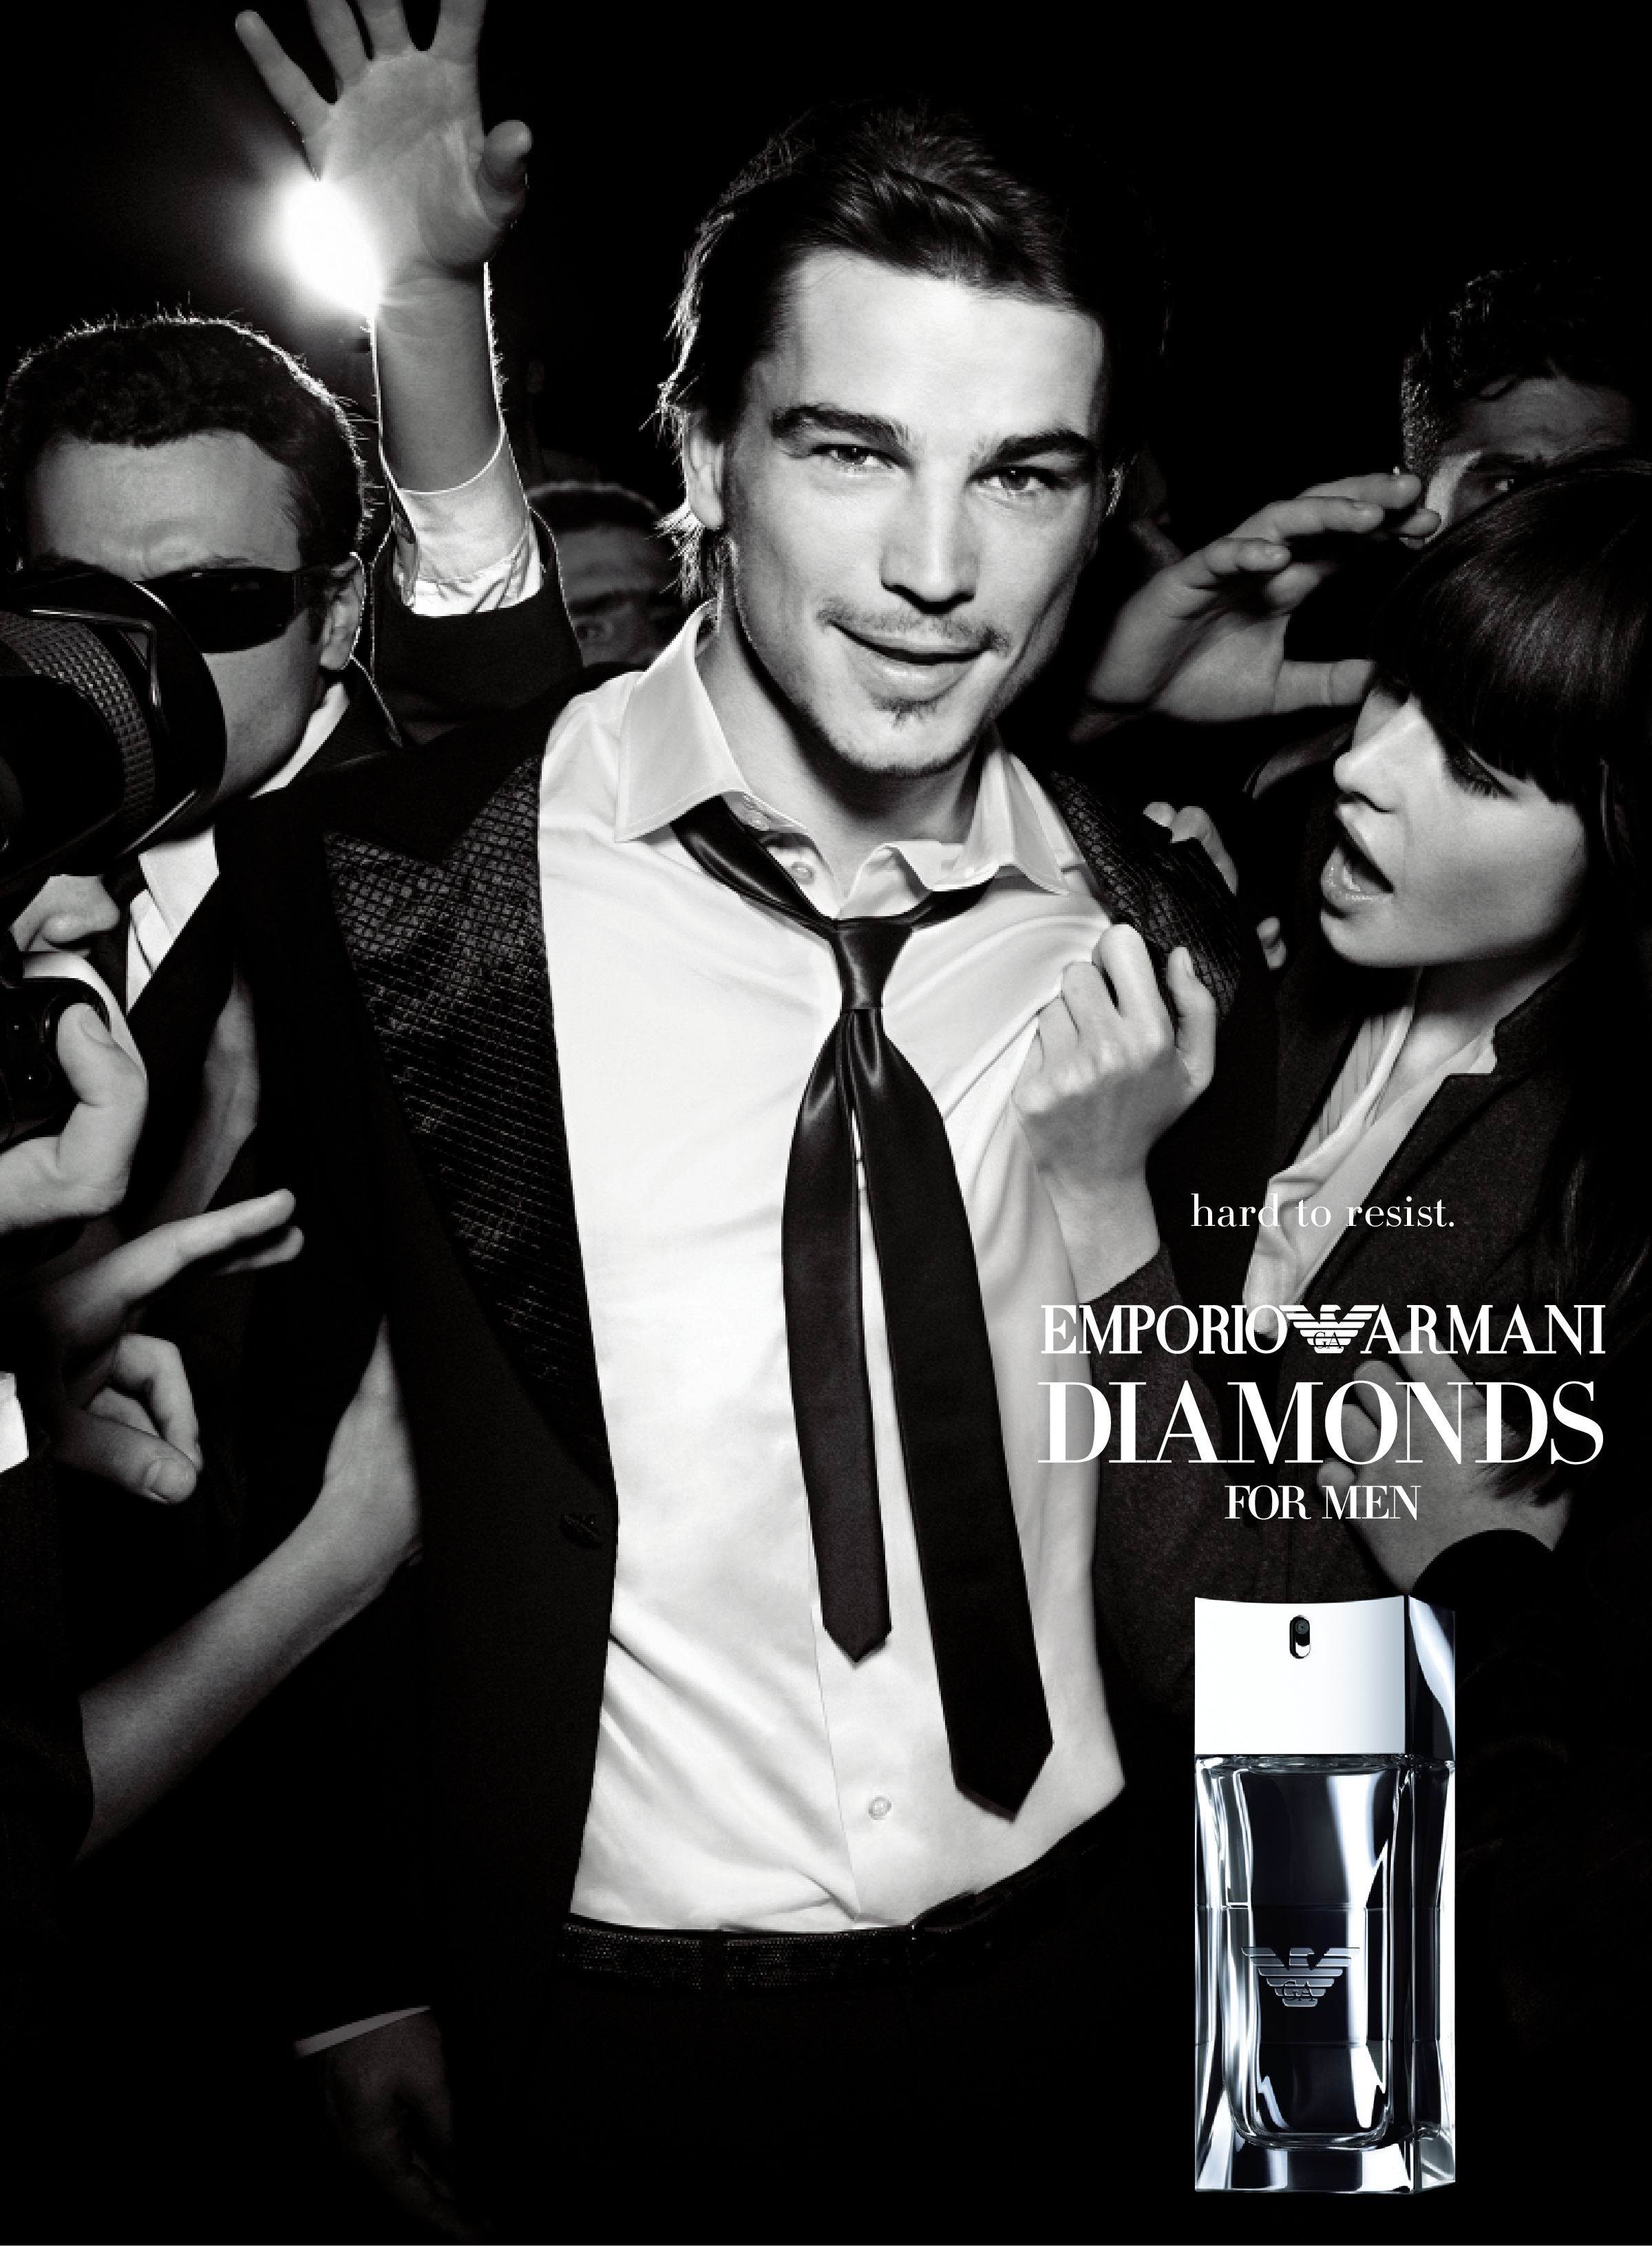 Giorgio Armani Emporio Armani Diamonds For Men EDT Pour Homme 4ml น้ำหอมที่เหมาะสำหรับชายหนุ่มที่ทันสมัย มีเสน่ห์ ดูคล่องแคล้ว ด้วยกลิ่นหอมหวานเซ็กซี่ จากกลิ่นของดอกไม้ ทำให้ใครๆก็อยากเข้าใกล้